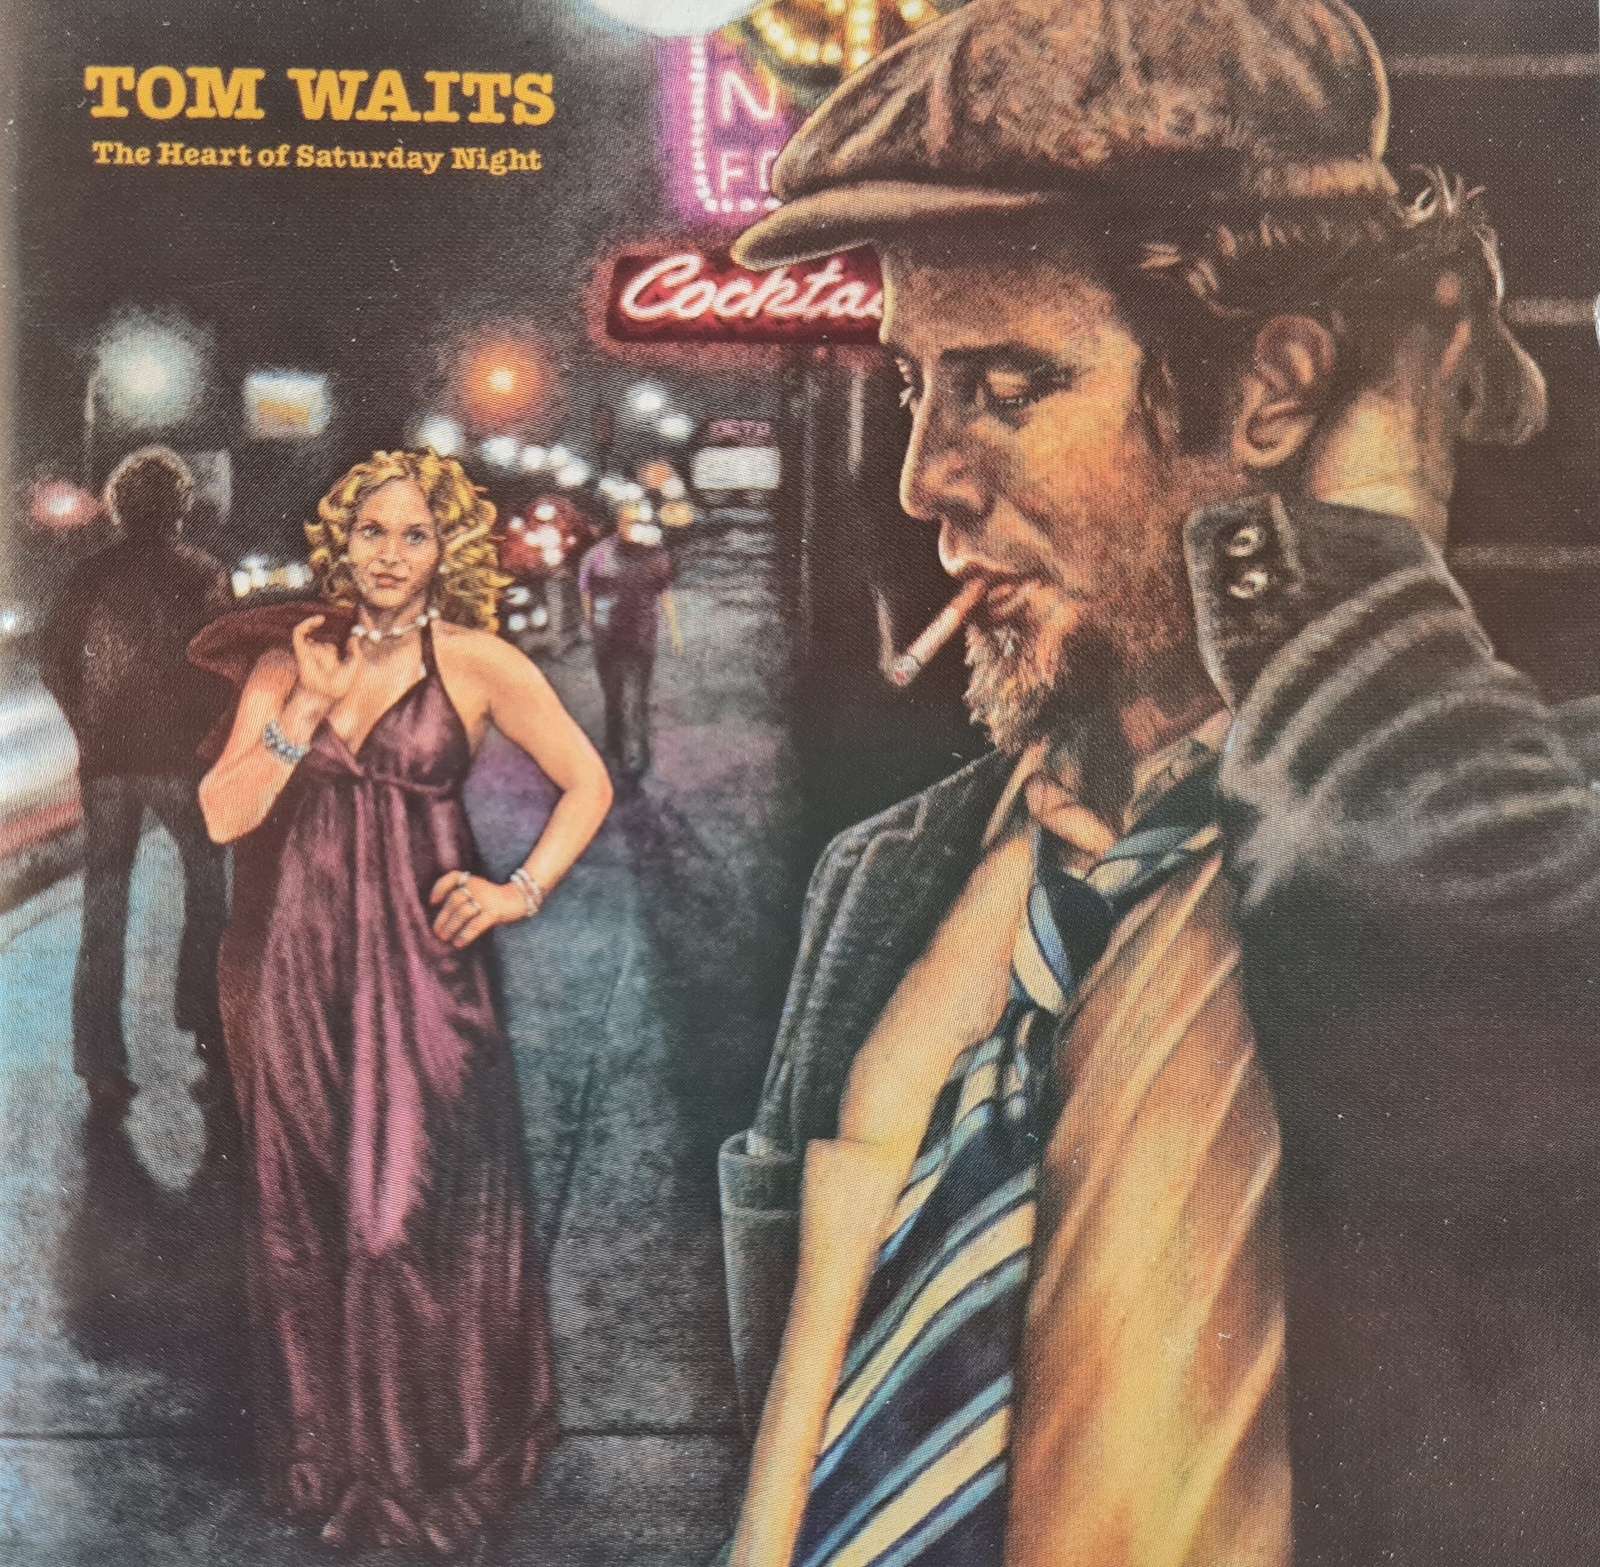 Tom Waits - The Heart of Saturday Night CD